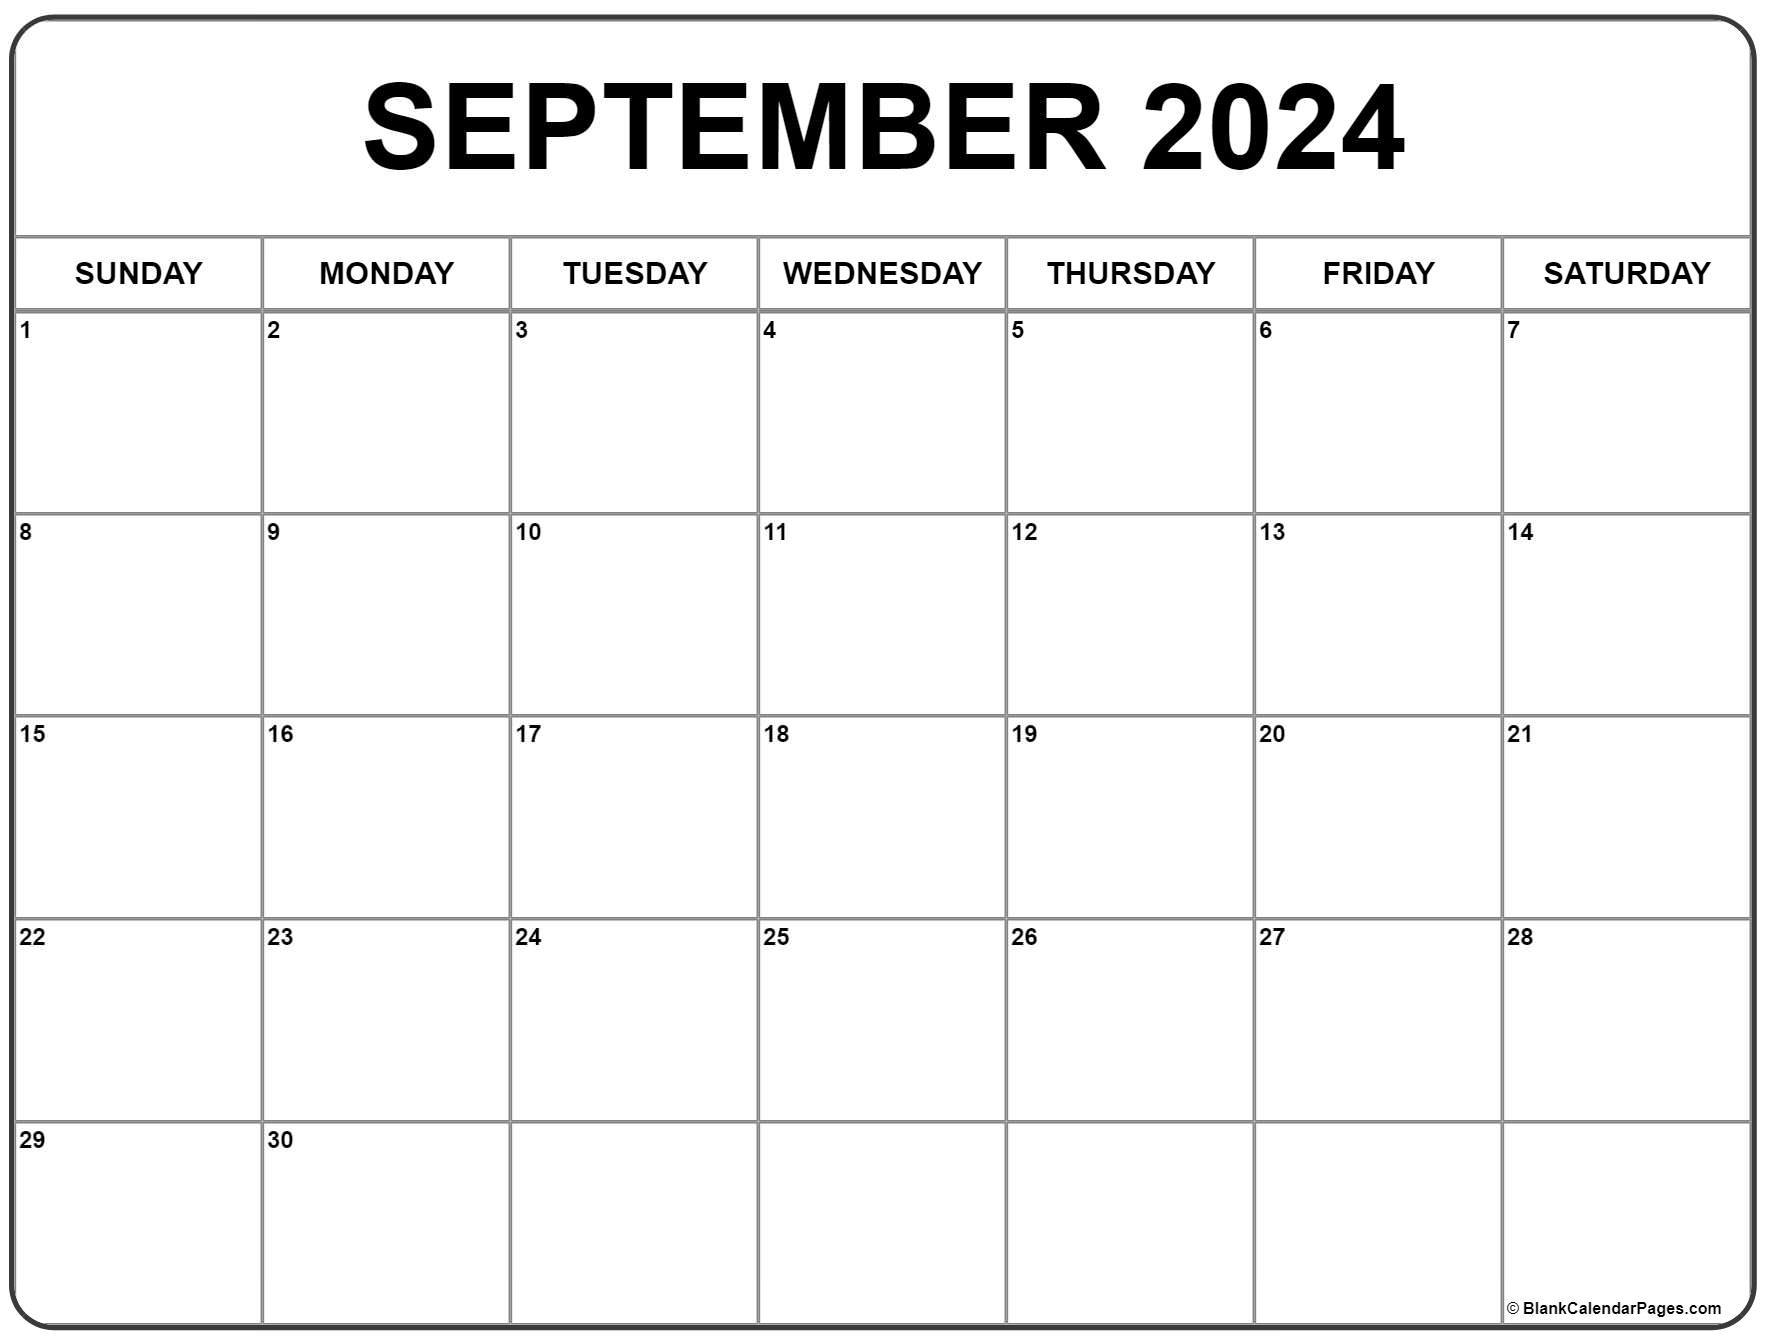 September 2024 Calendar | Free Printable Calendar for September 2024 Free Printable Calendar